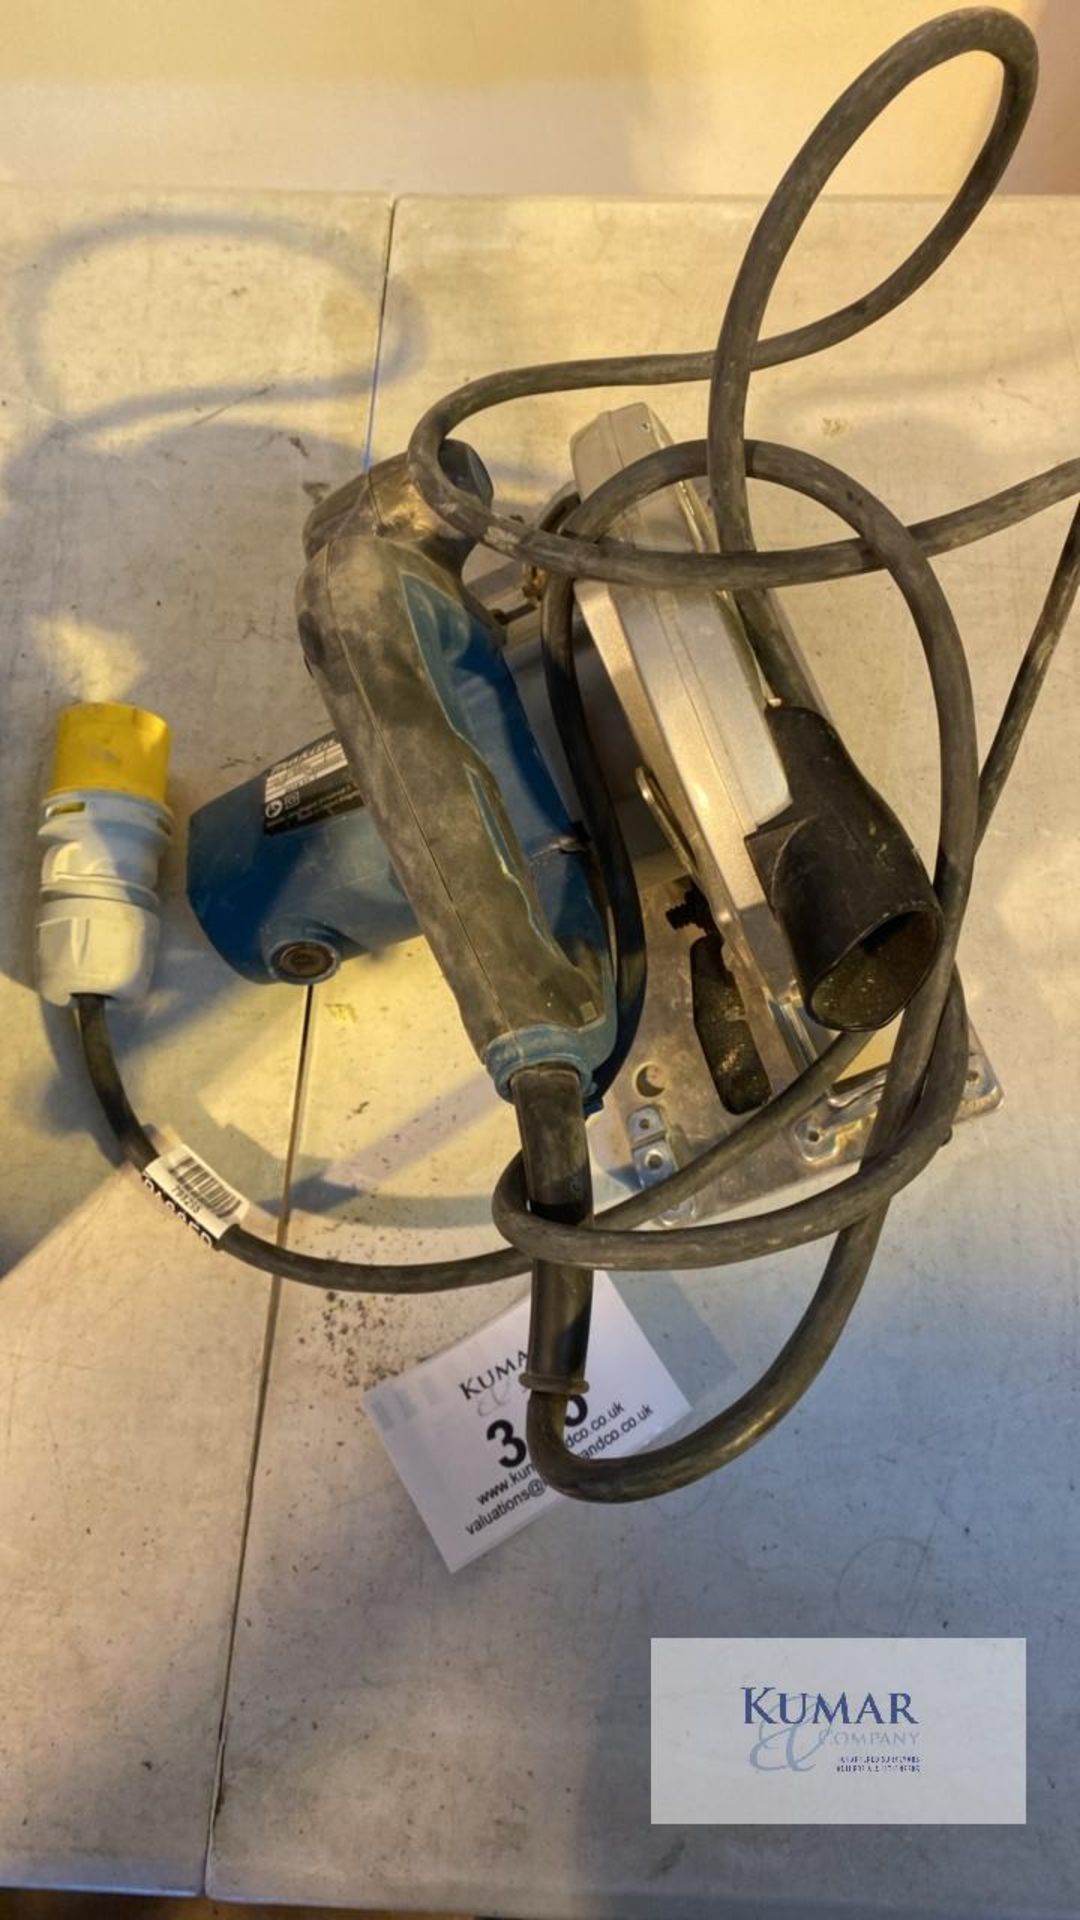 Makita HS7601J 110 Volt Circular Saw, Serial No.383733G (11/2018) in Carry Case